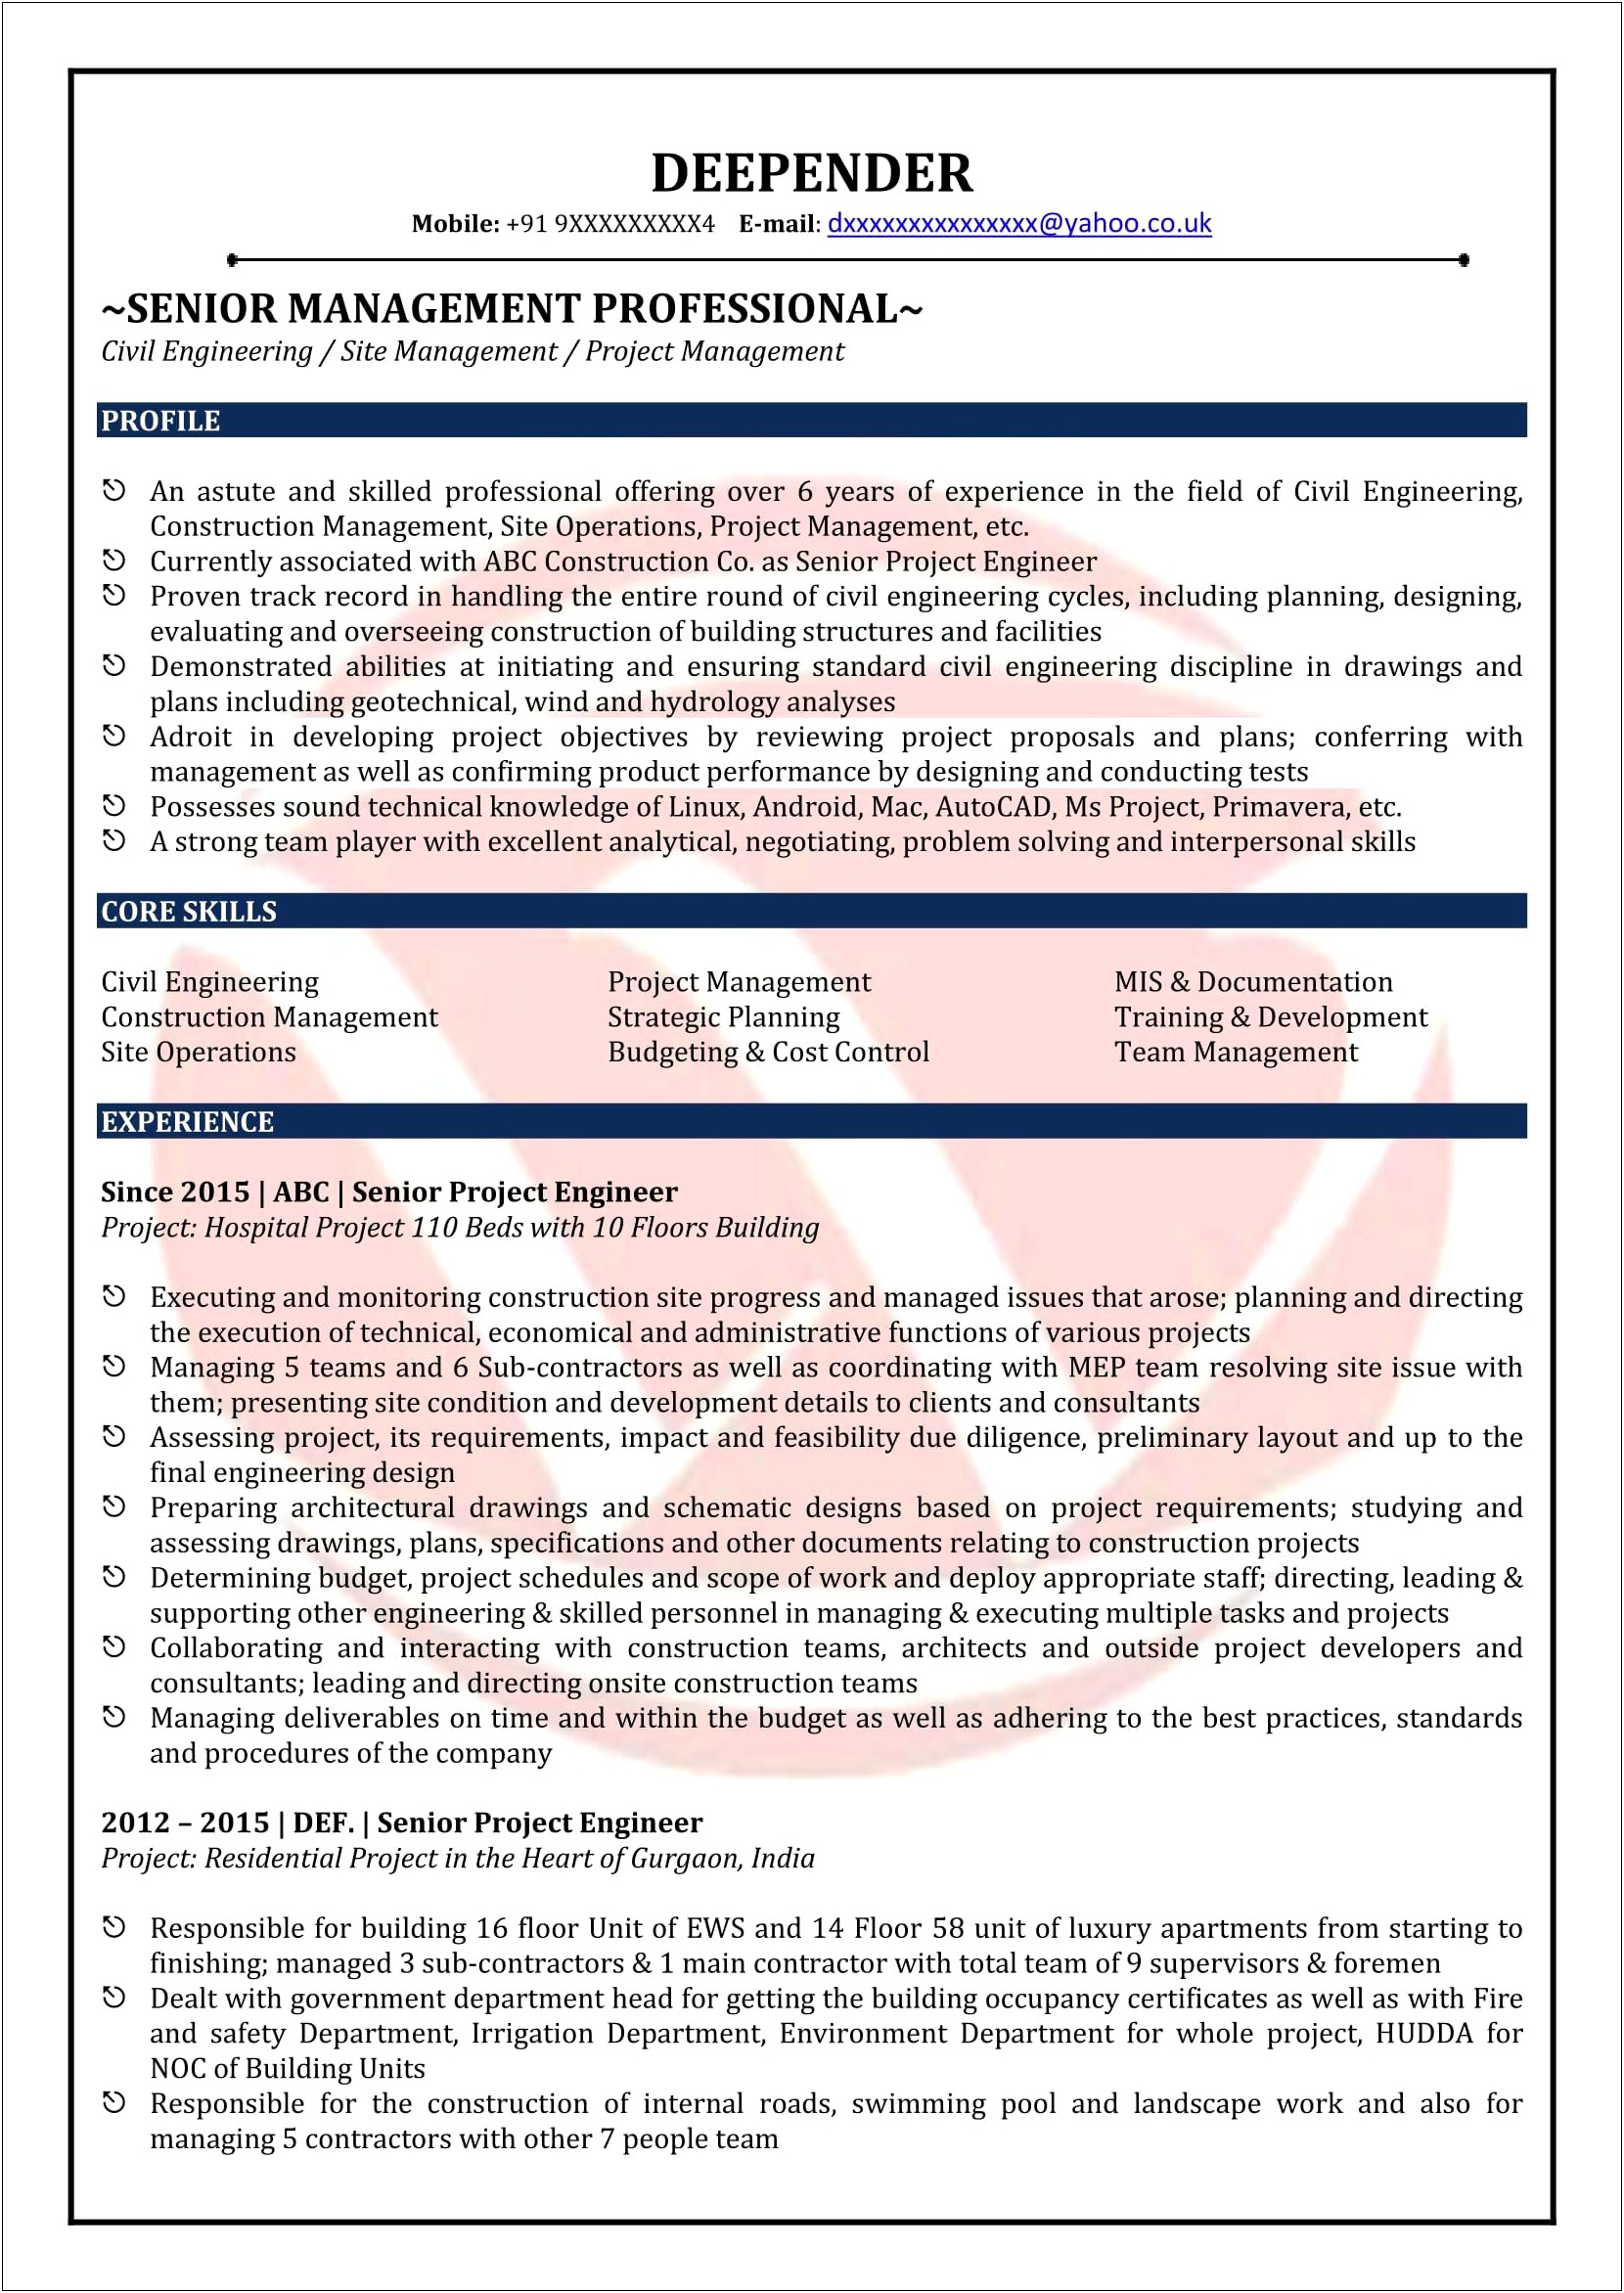 Resume Summary For Fresher Civil Engineer